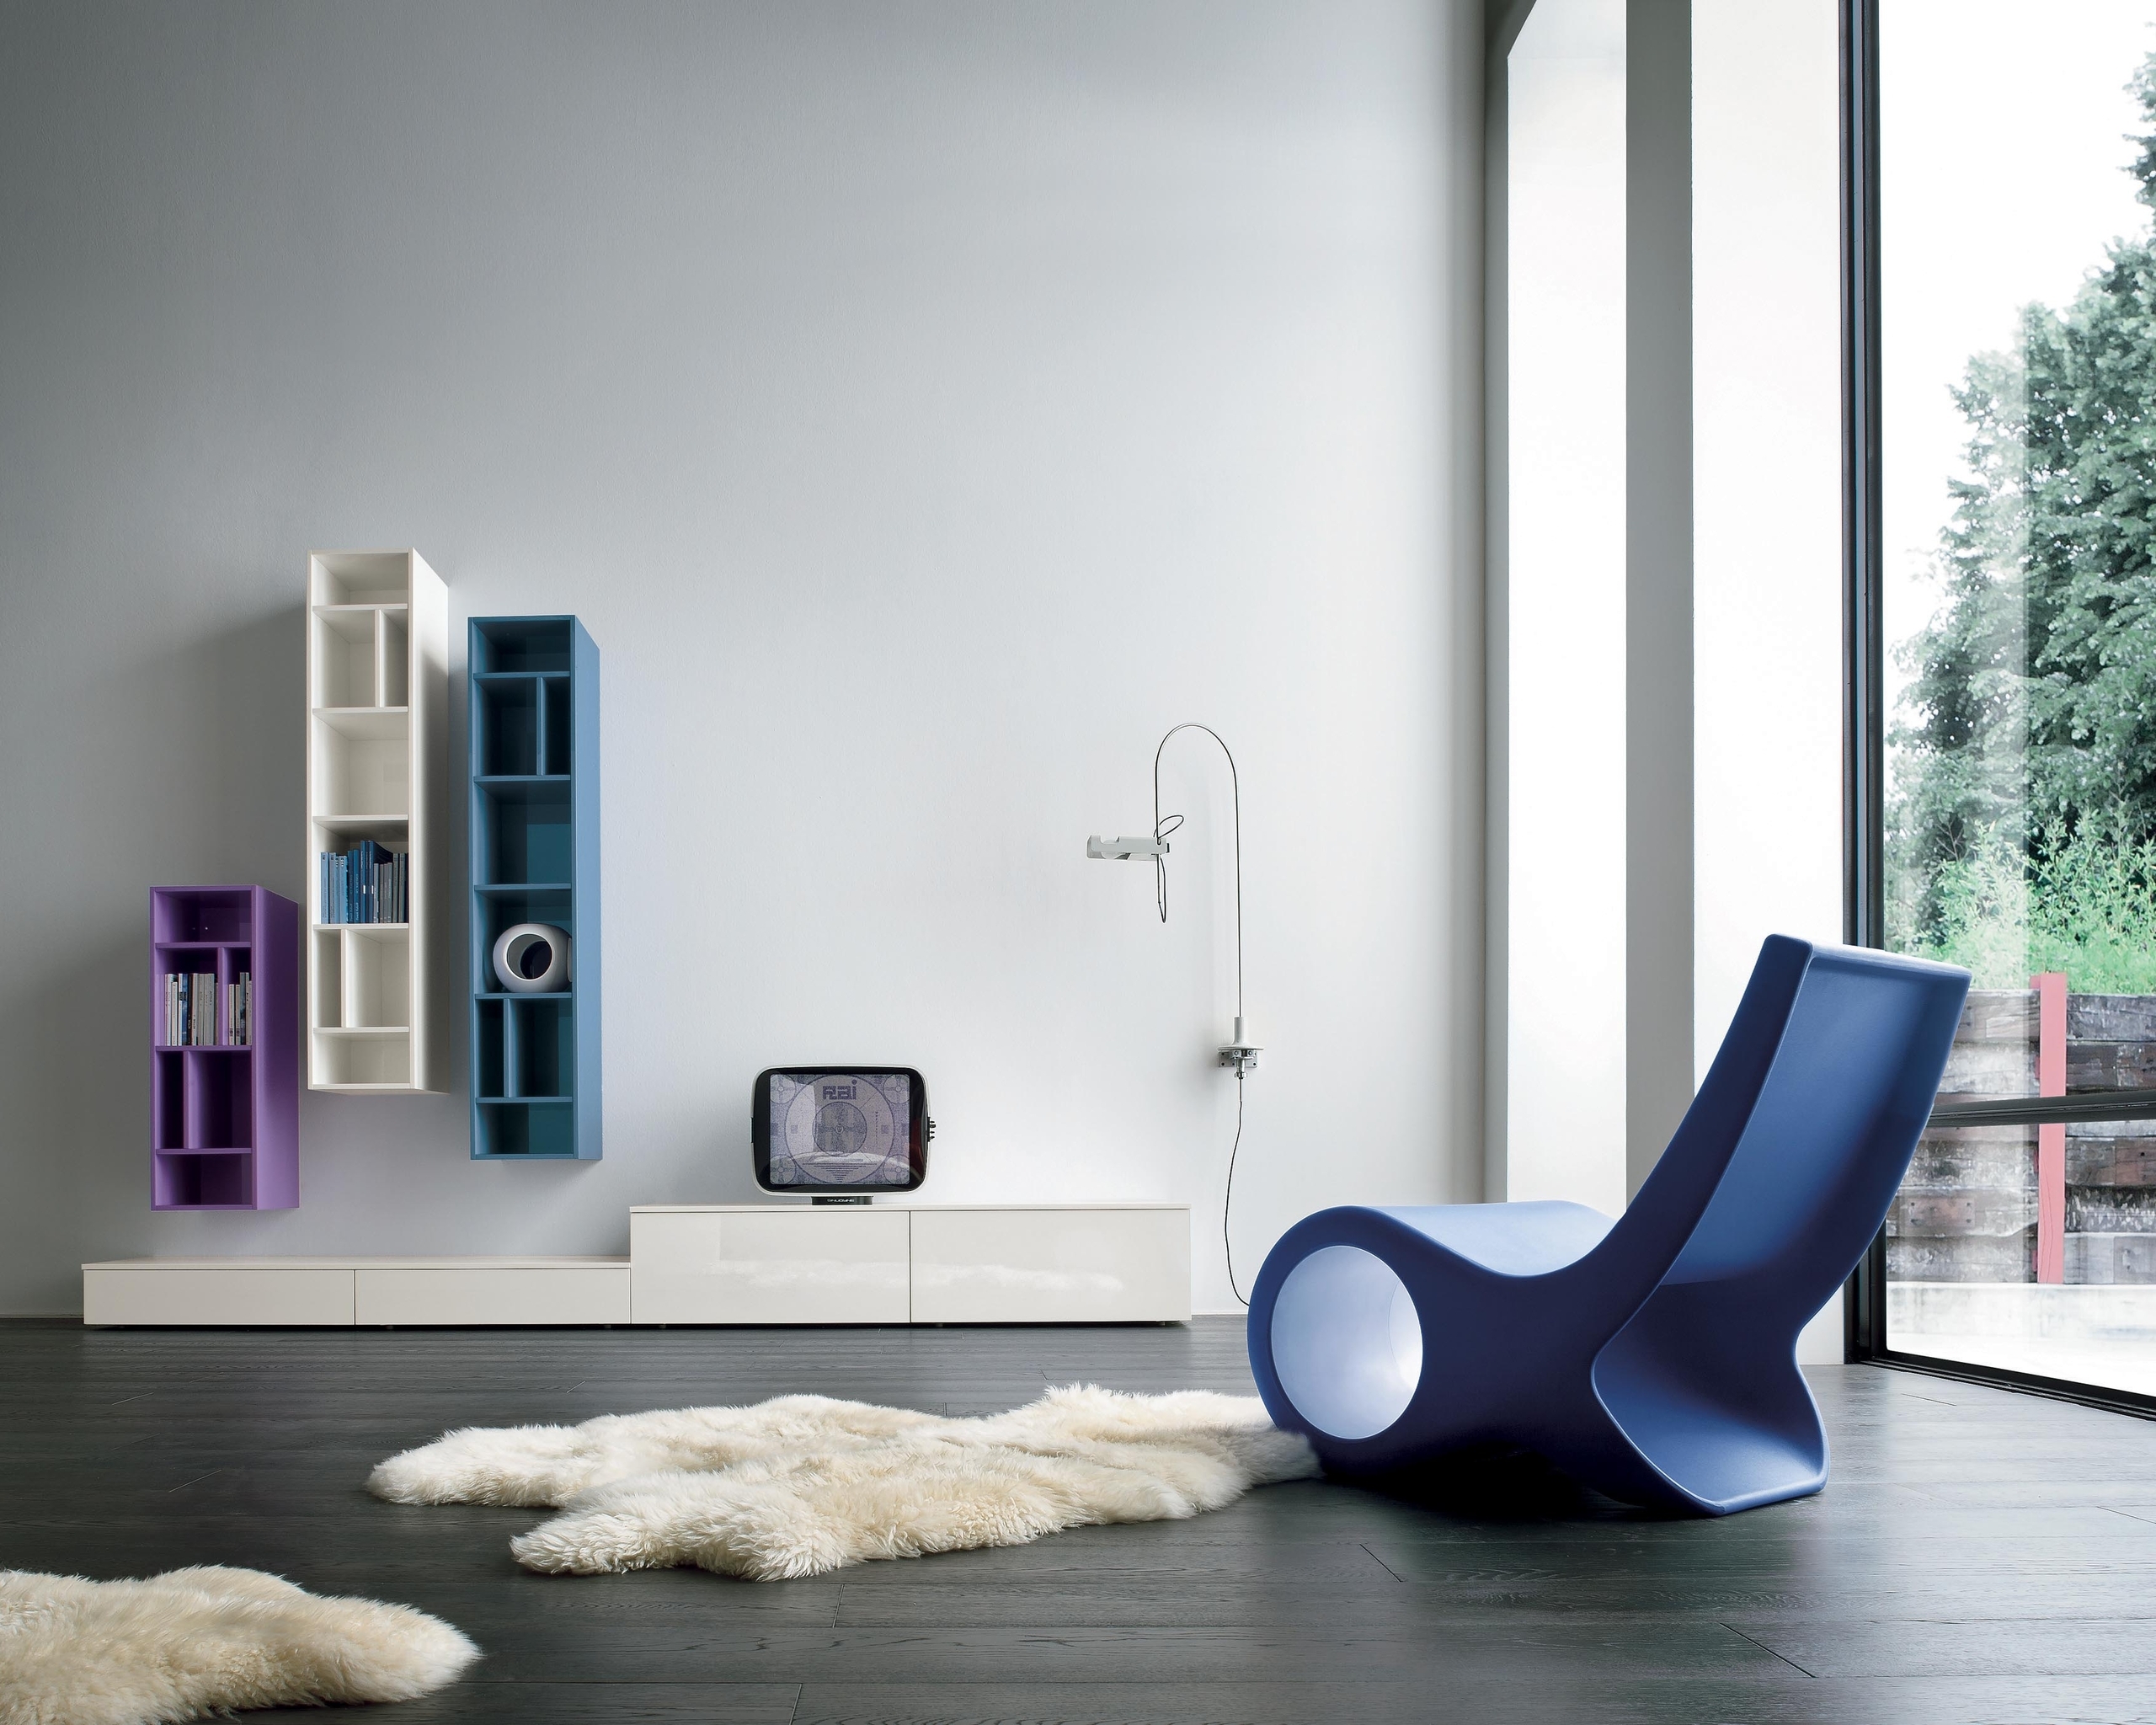 Image: Chair, design, skin, shelf, modern, white, interior